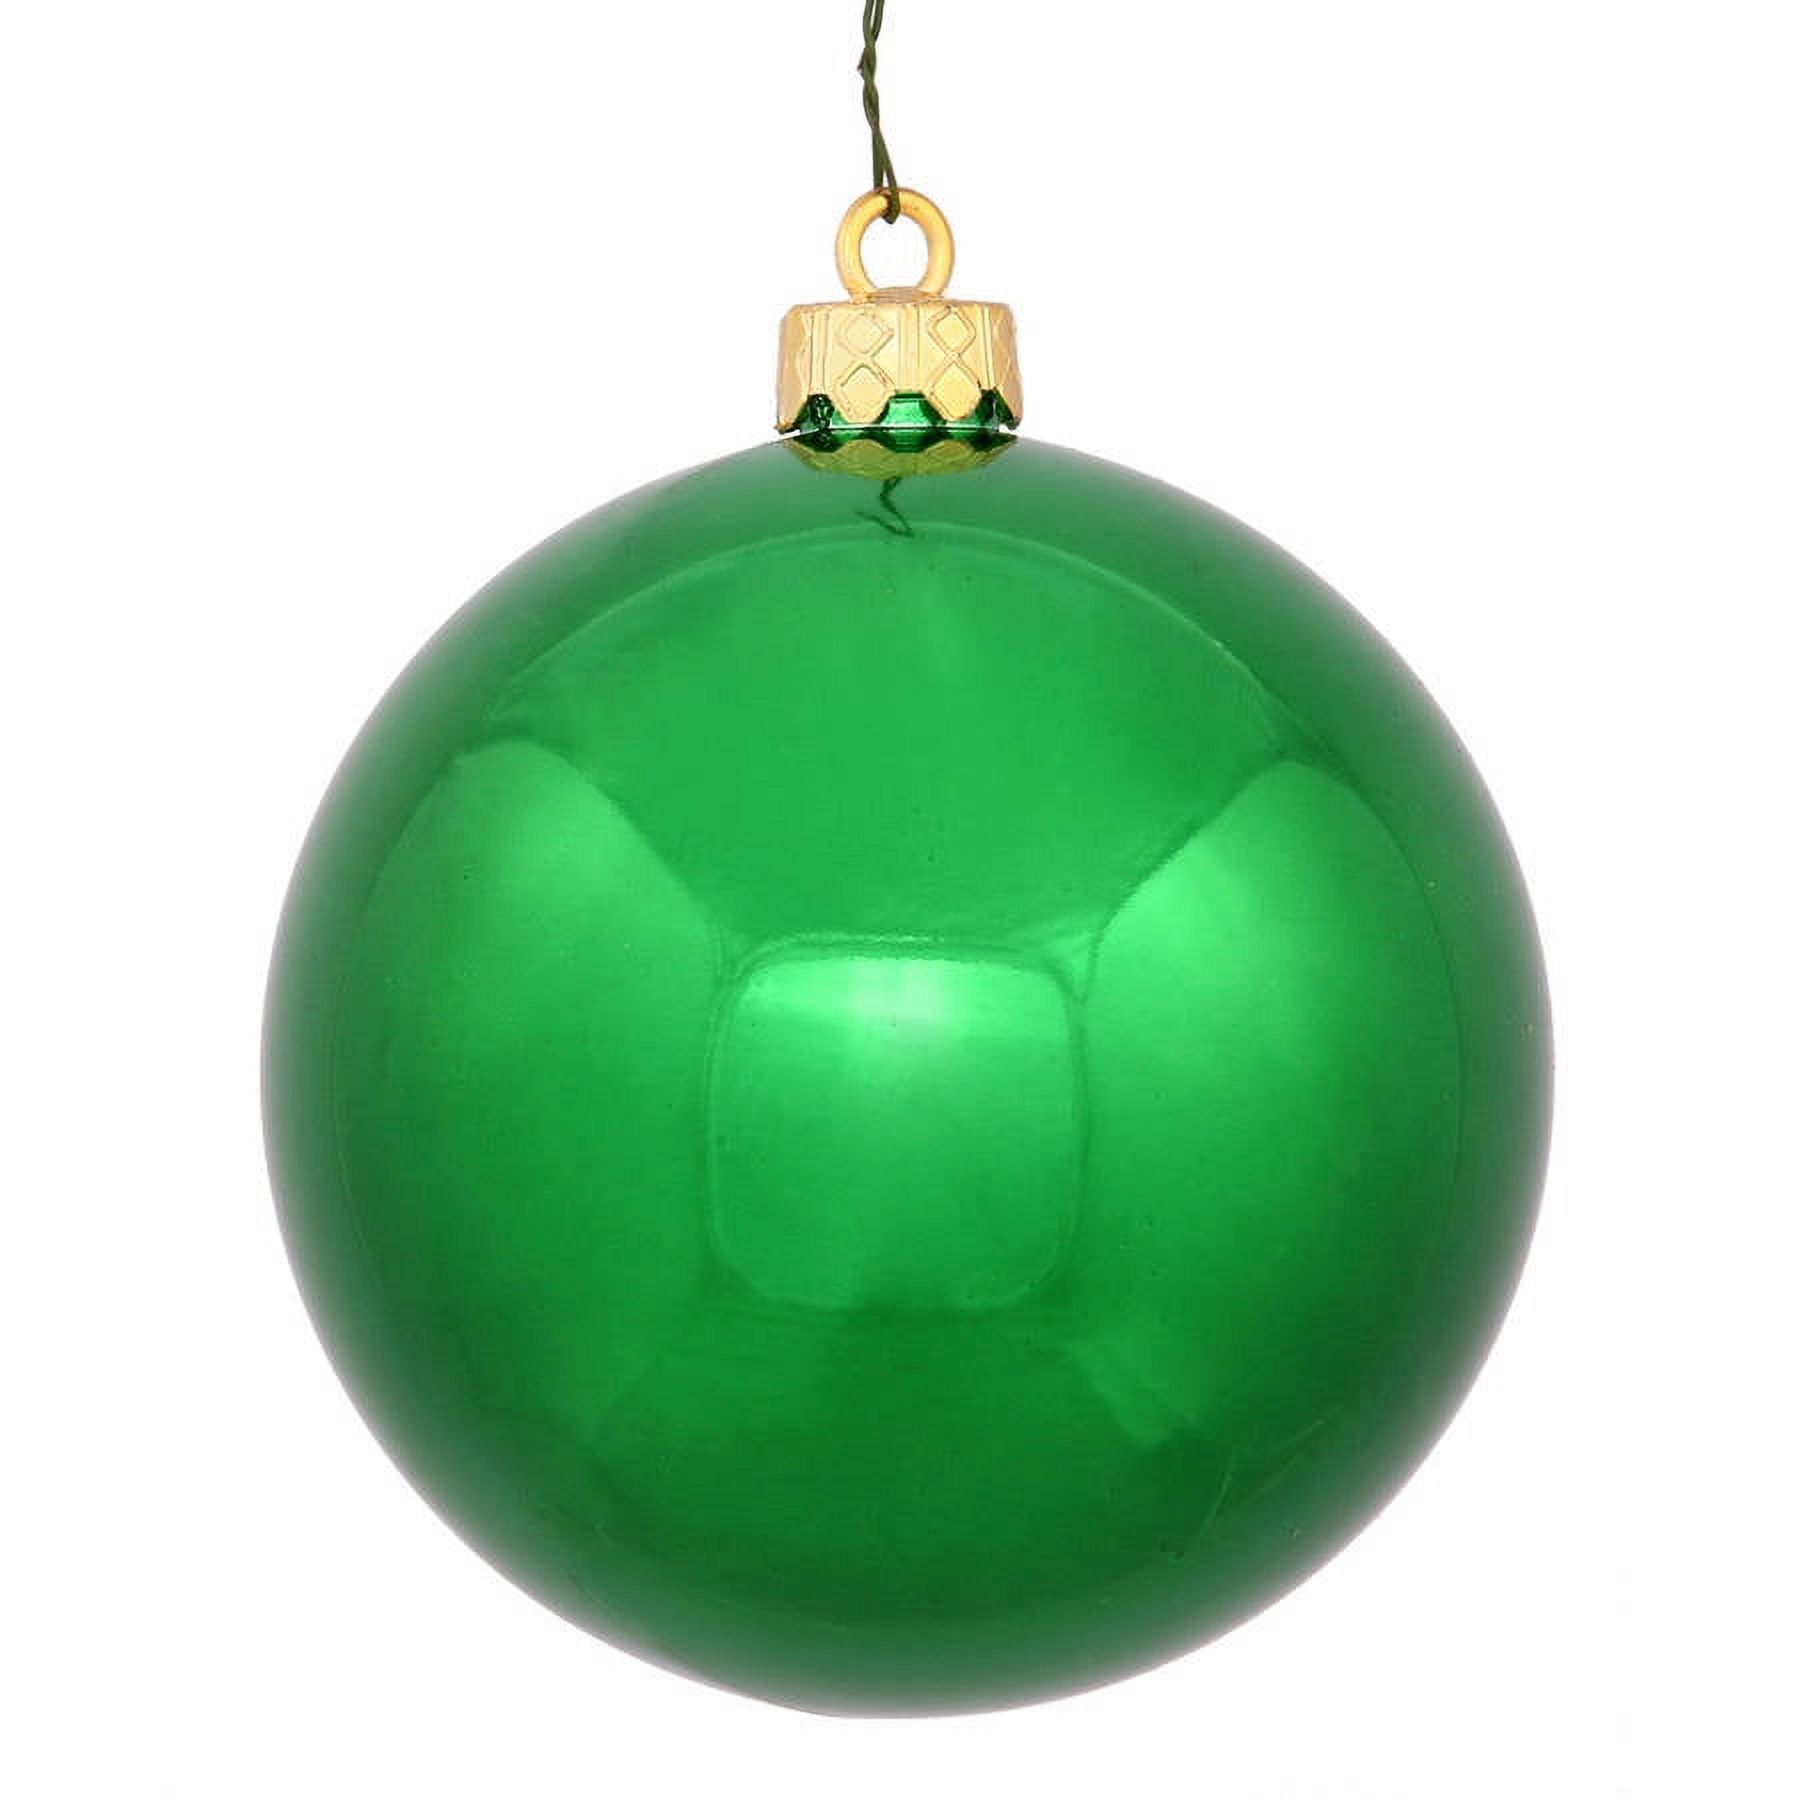 Vickerman 2.75" Christmas Ornament Ball, Emerald Shiny Finish, Shatterproof Plastic, UV Resistant, Holiday Christmas Tree Decoration, 12 Pack - image 1 of 2